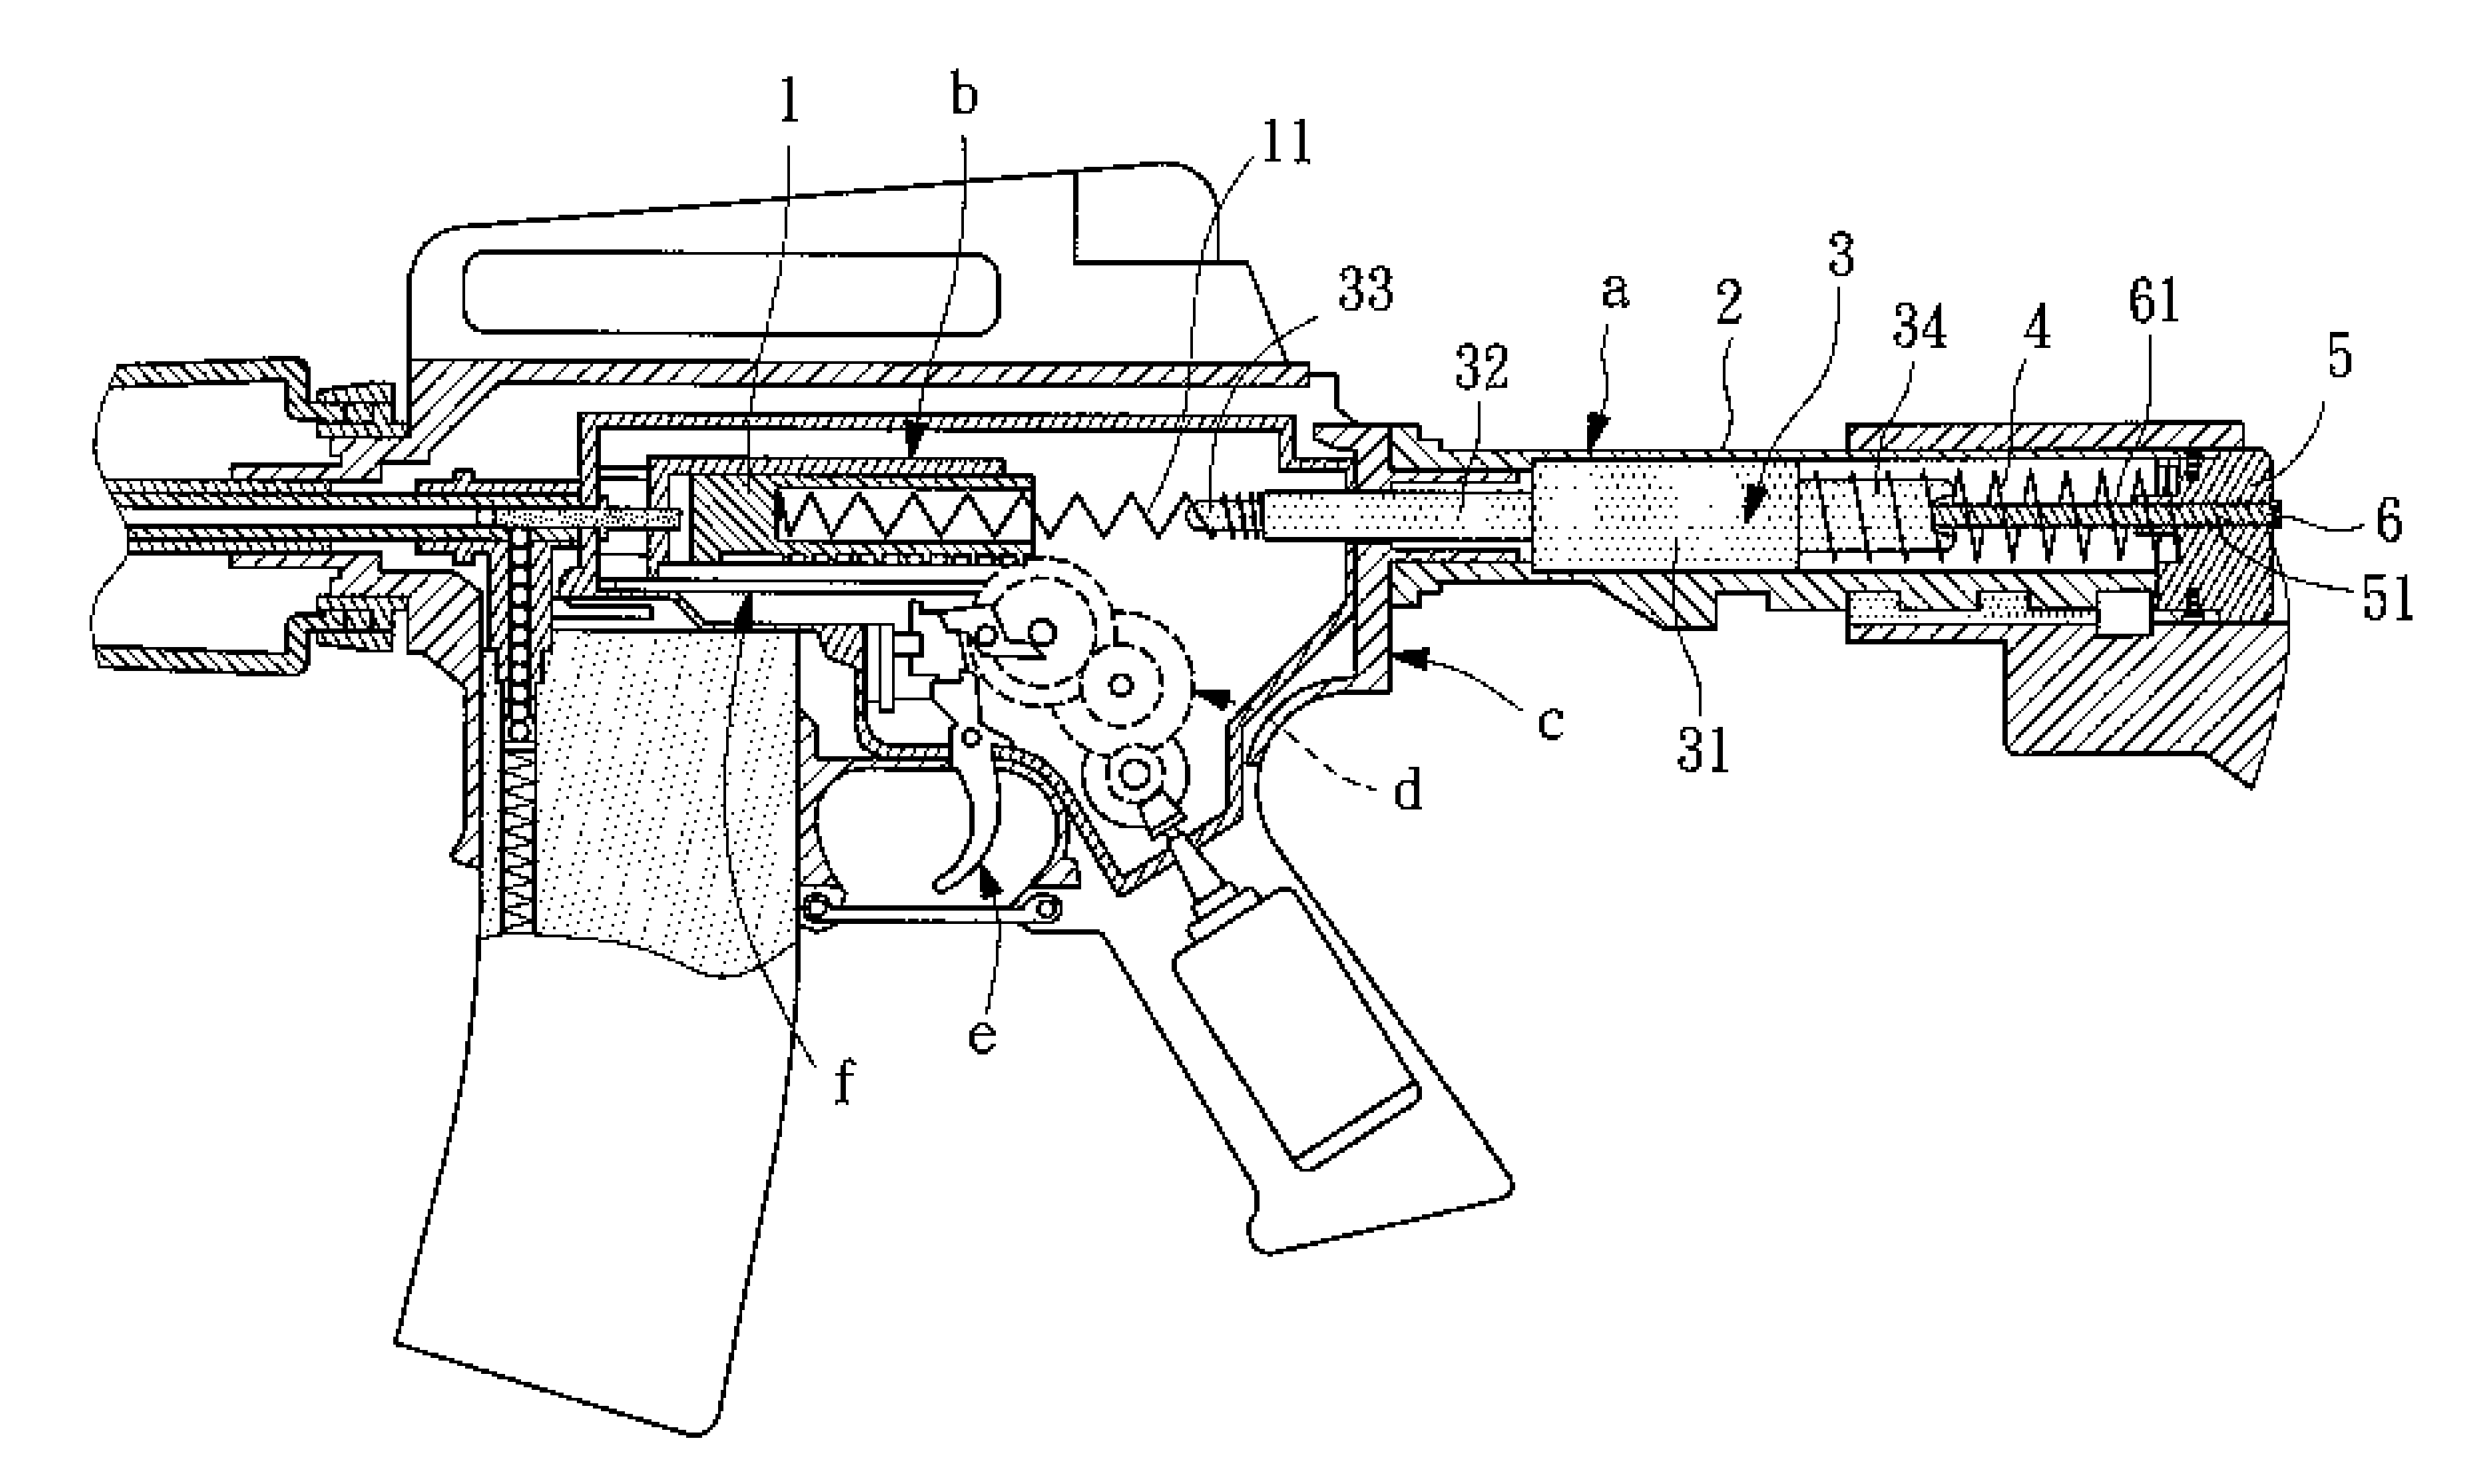 Toy rifle backlash vibration structure